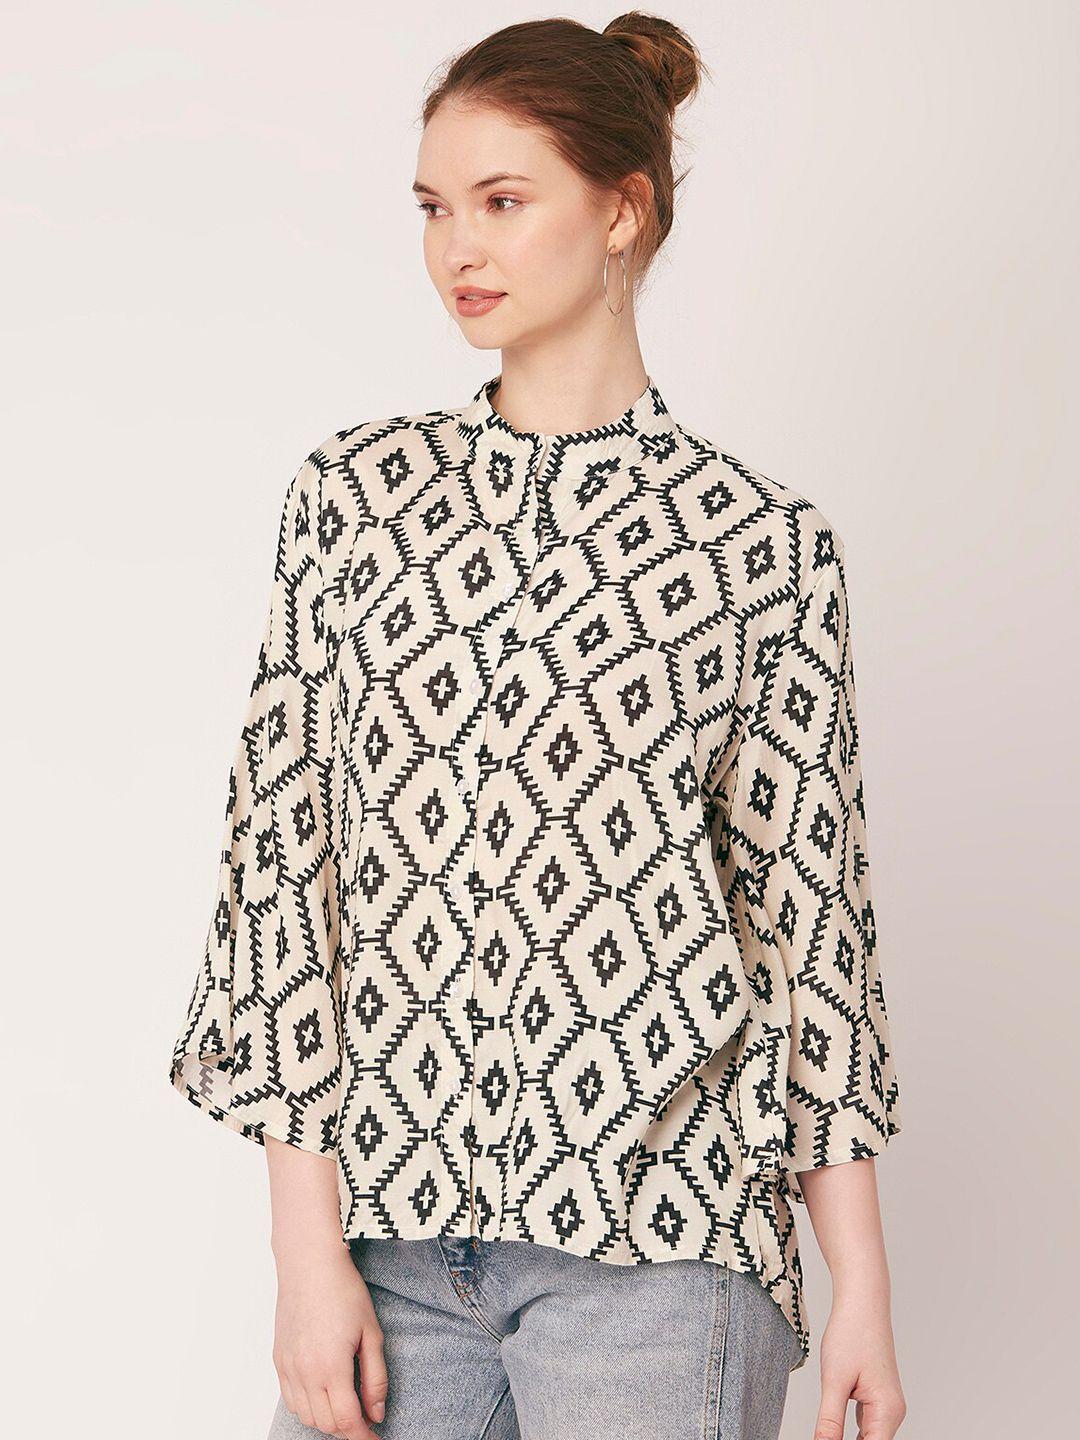 moomaya classic geometric printed shirt style modal top